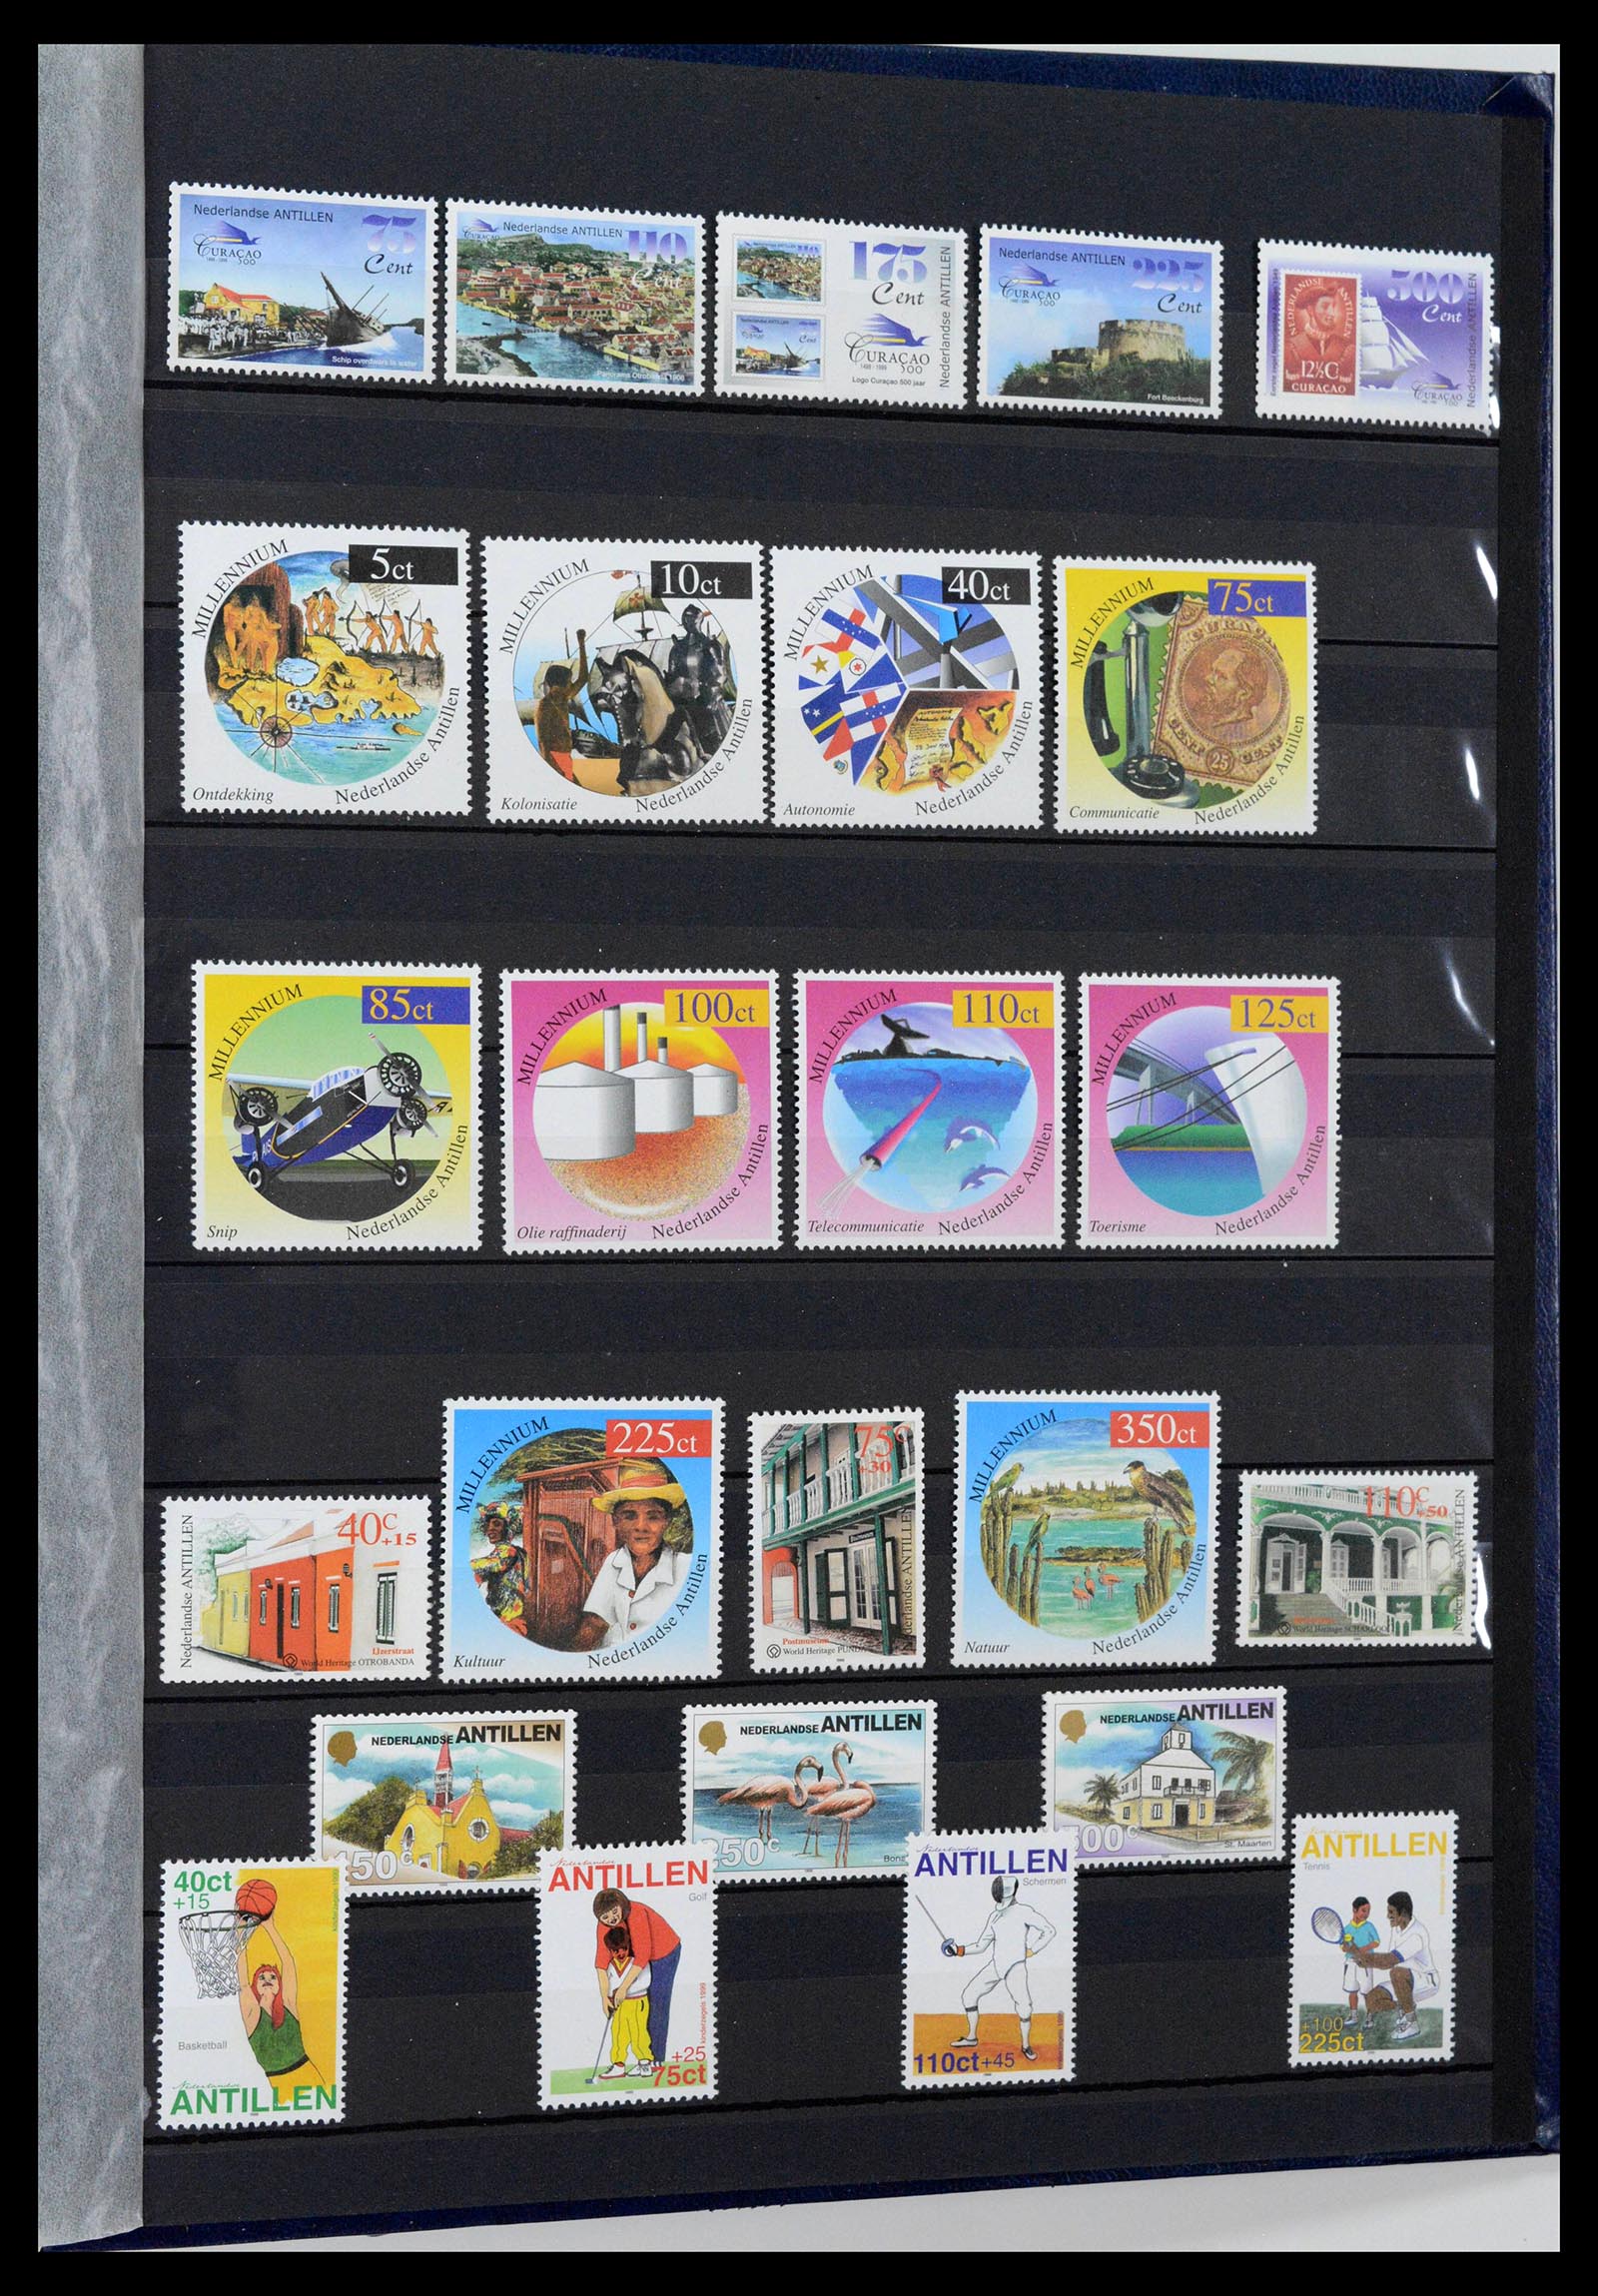 39027 0058 - Stamp collection 39027 Curaçao/Antilles/Aruba 1873-2009.